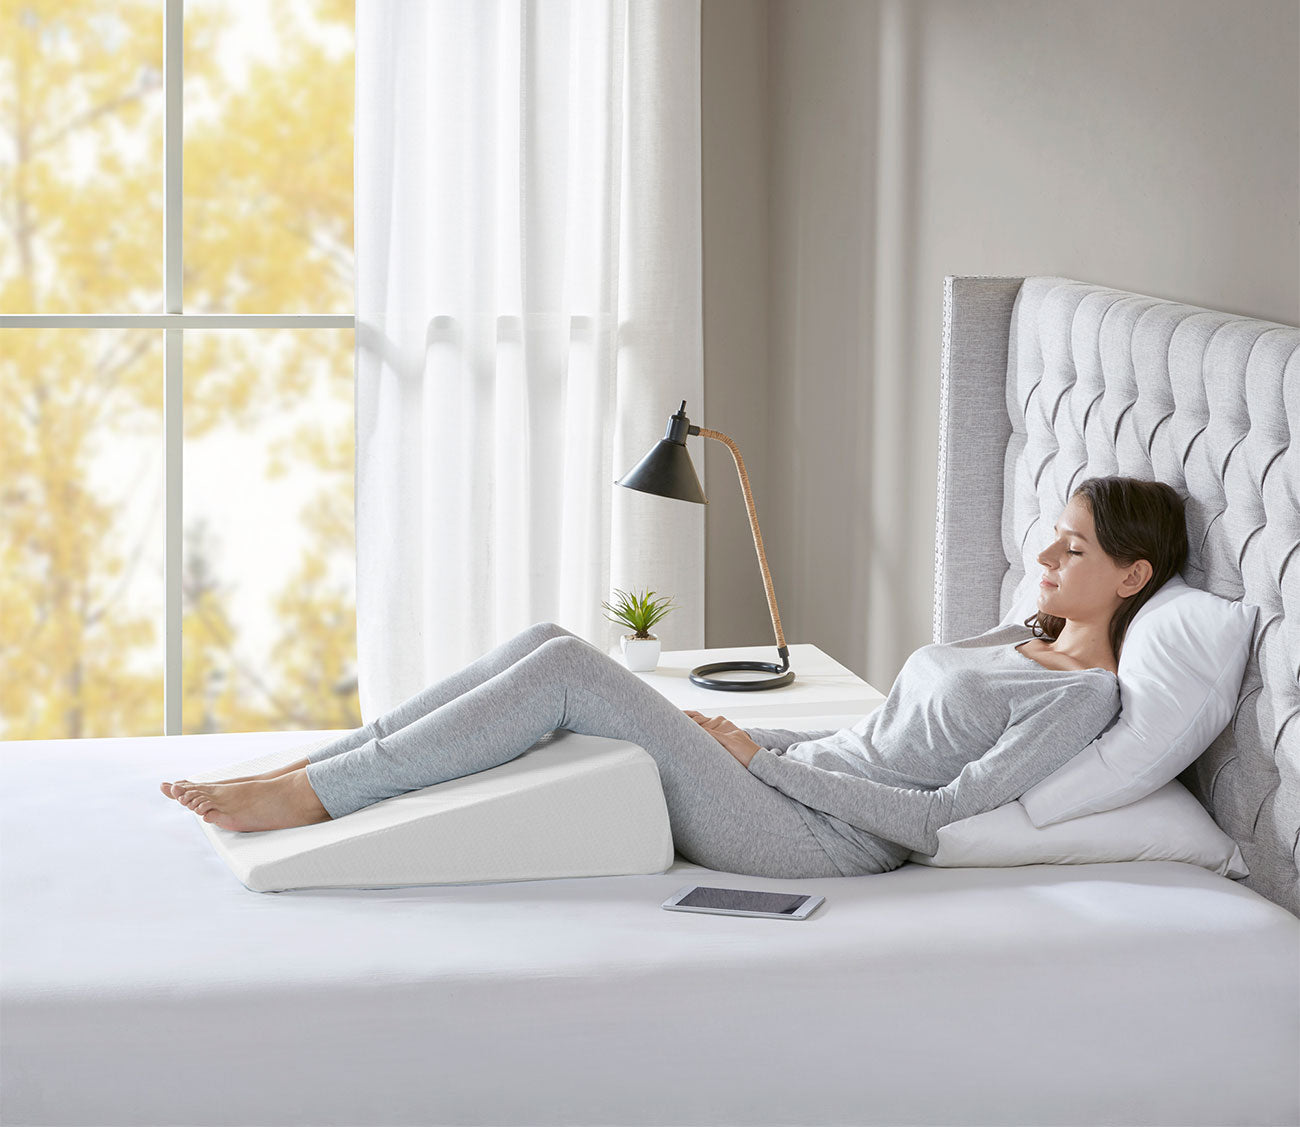 BEDGEAR  Knee Pillow for Sleep Health